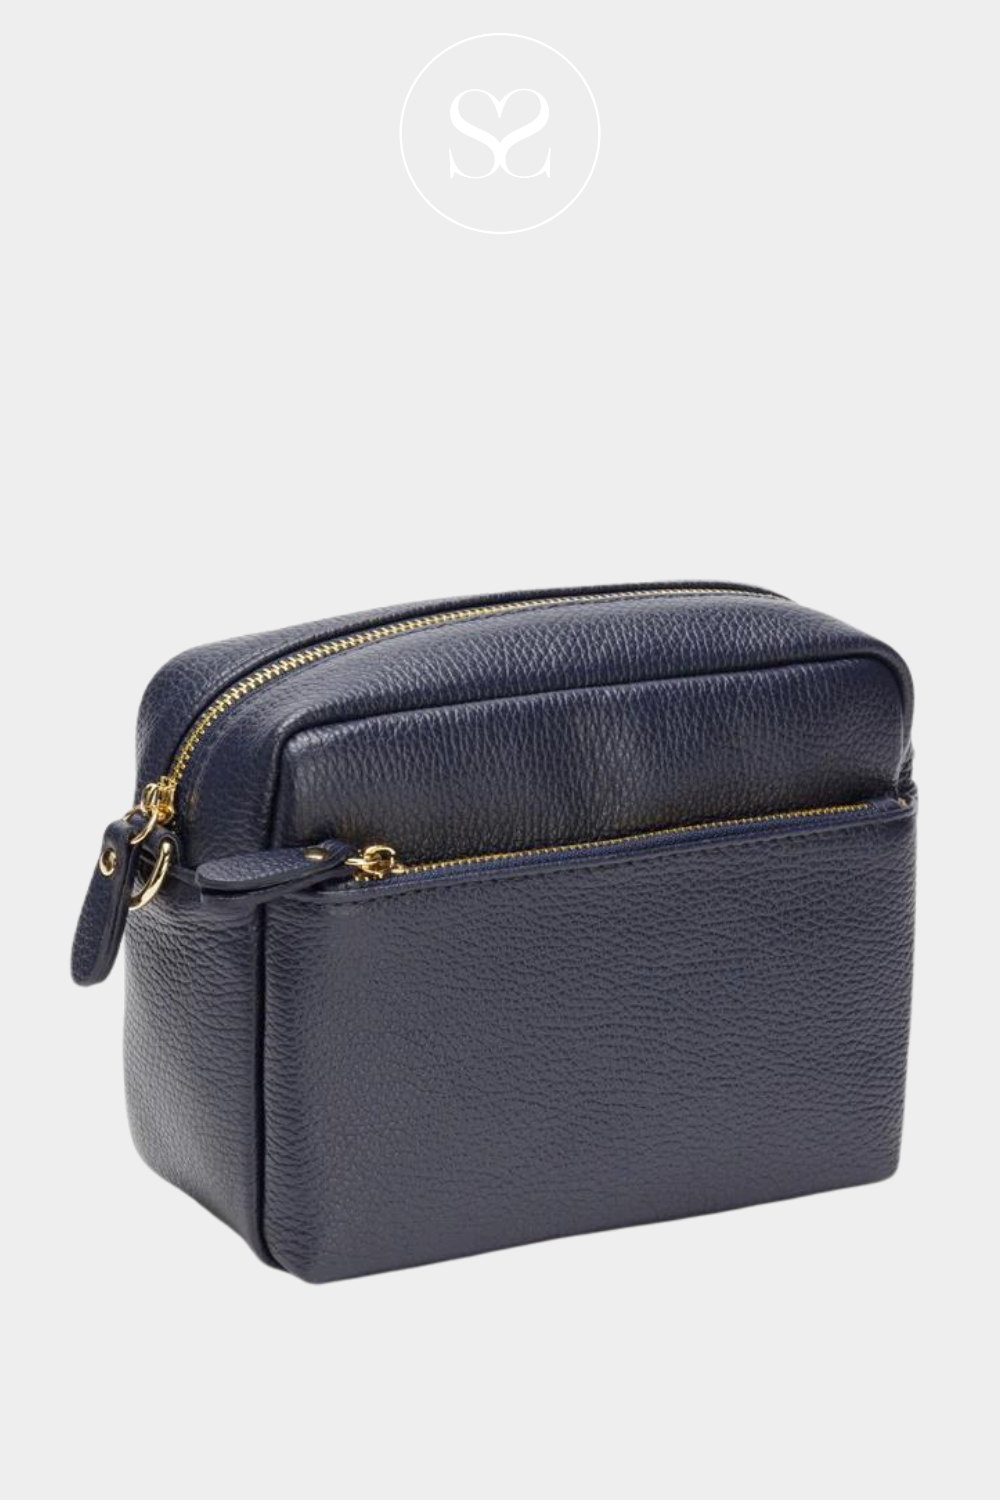 navy leather handbag for everyday - crossbody style